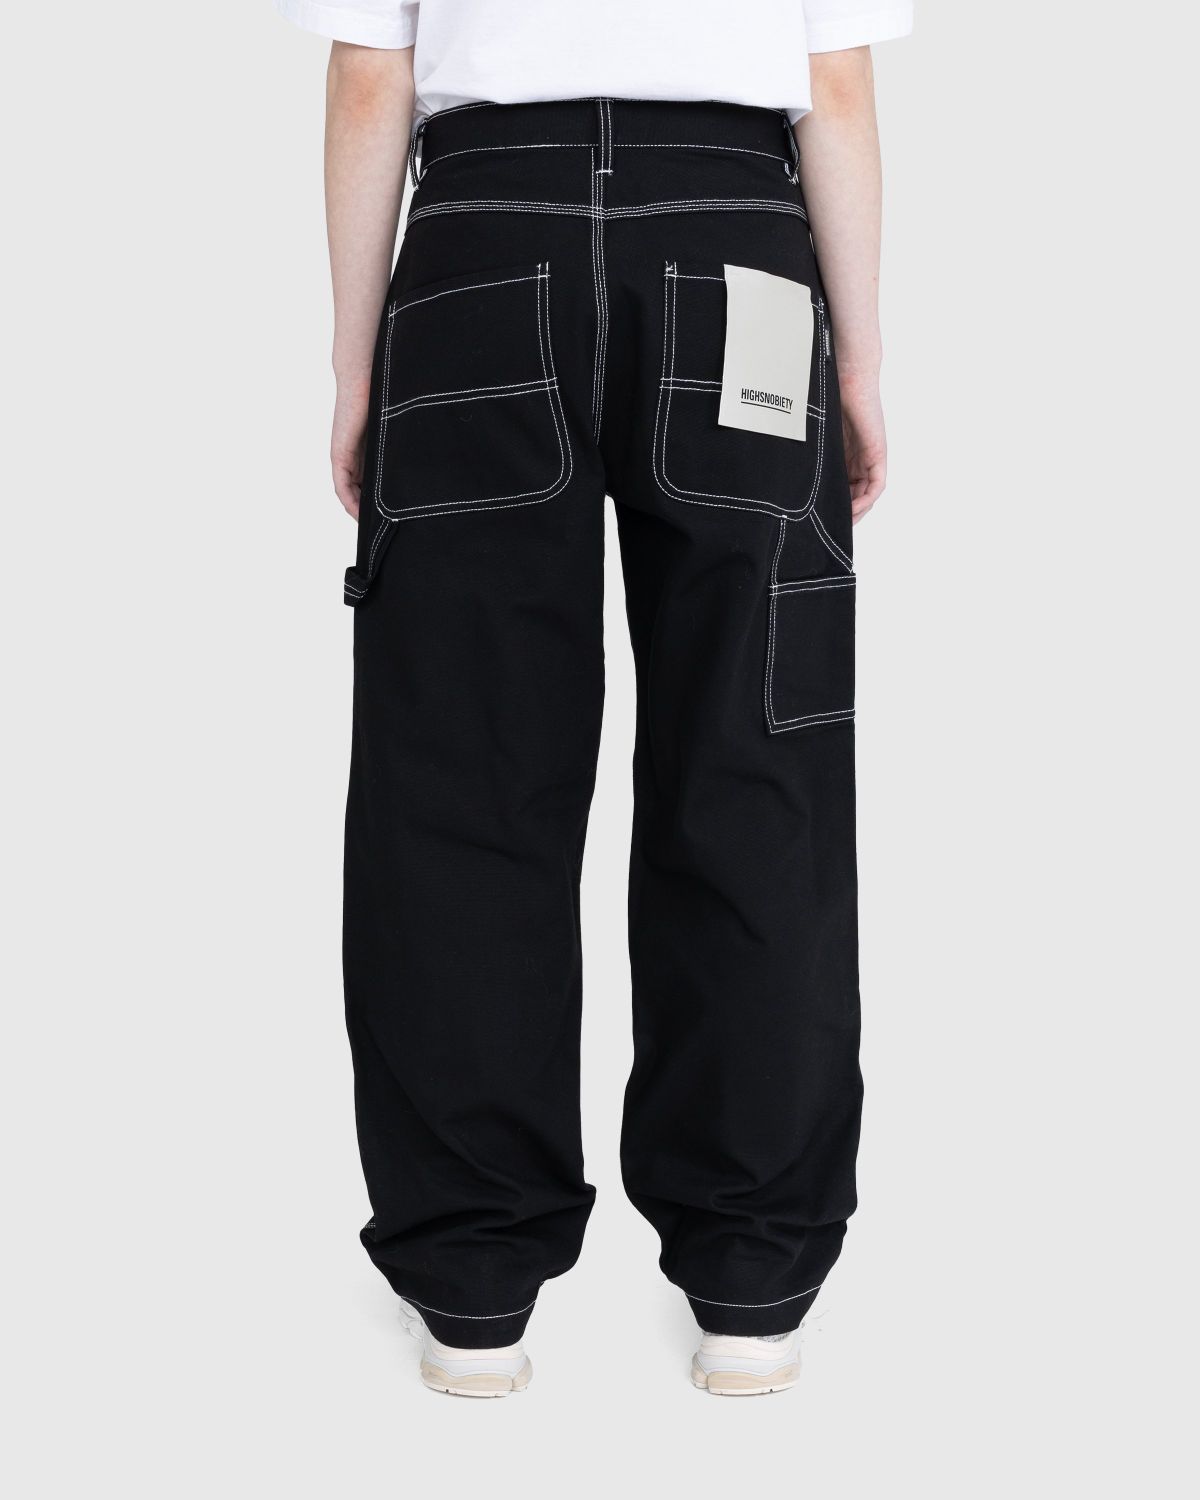 Highsnobiety – Carpenter Trouser Black - Pants - Black - Image 4